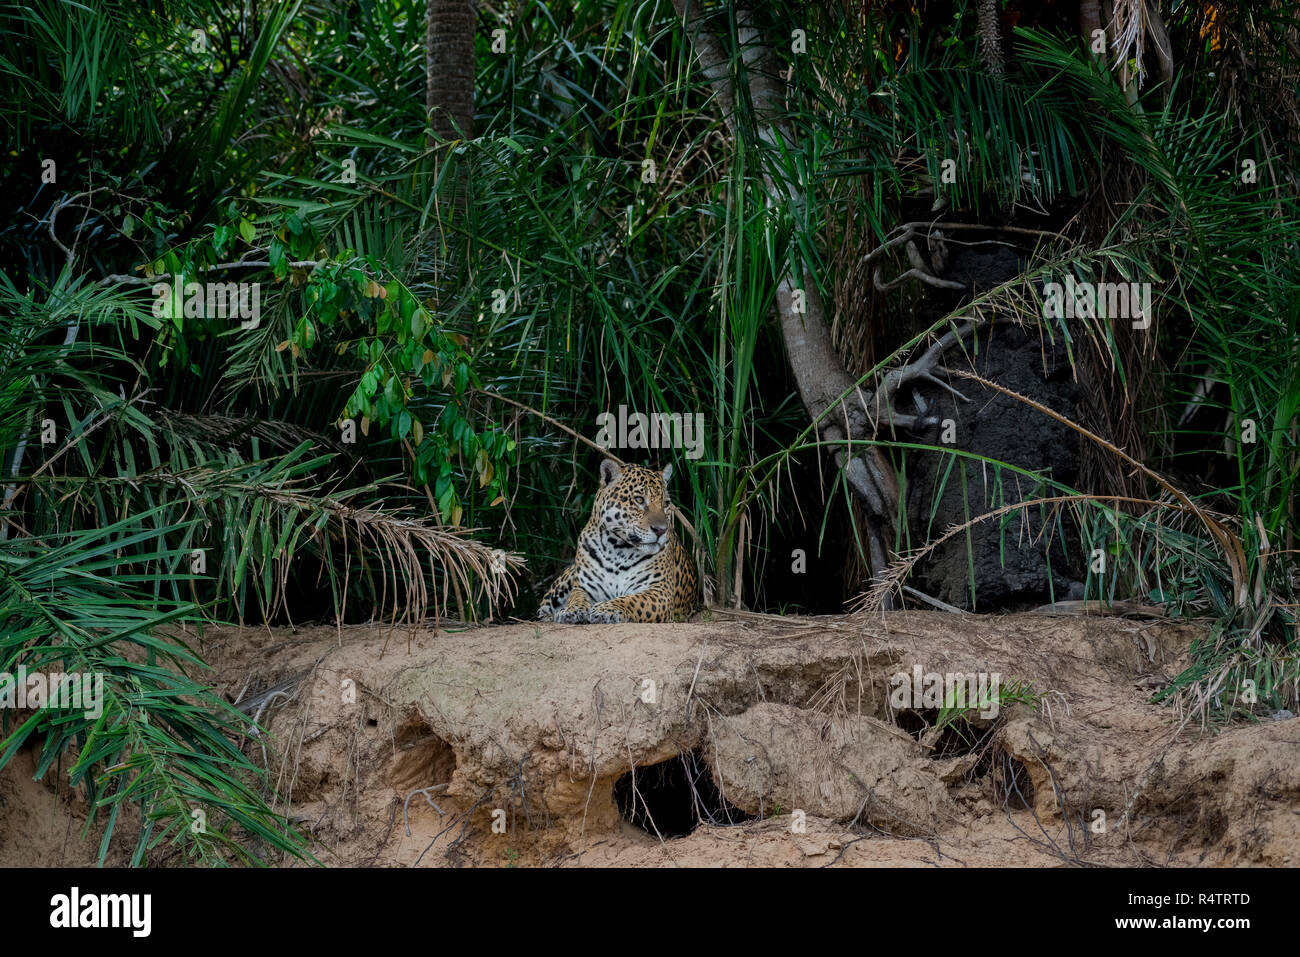 Jaguar (Panthera onca) on the lookout, banks of the Rio Negro, dense vegetation, Barranco Alto, Pantanal, Mato Grosso do Sul Stock Photo